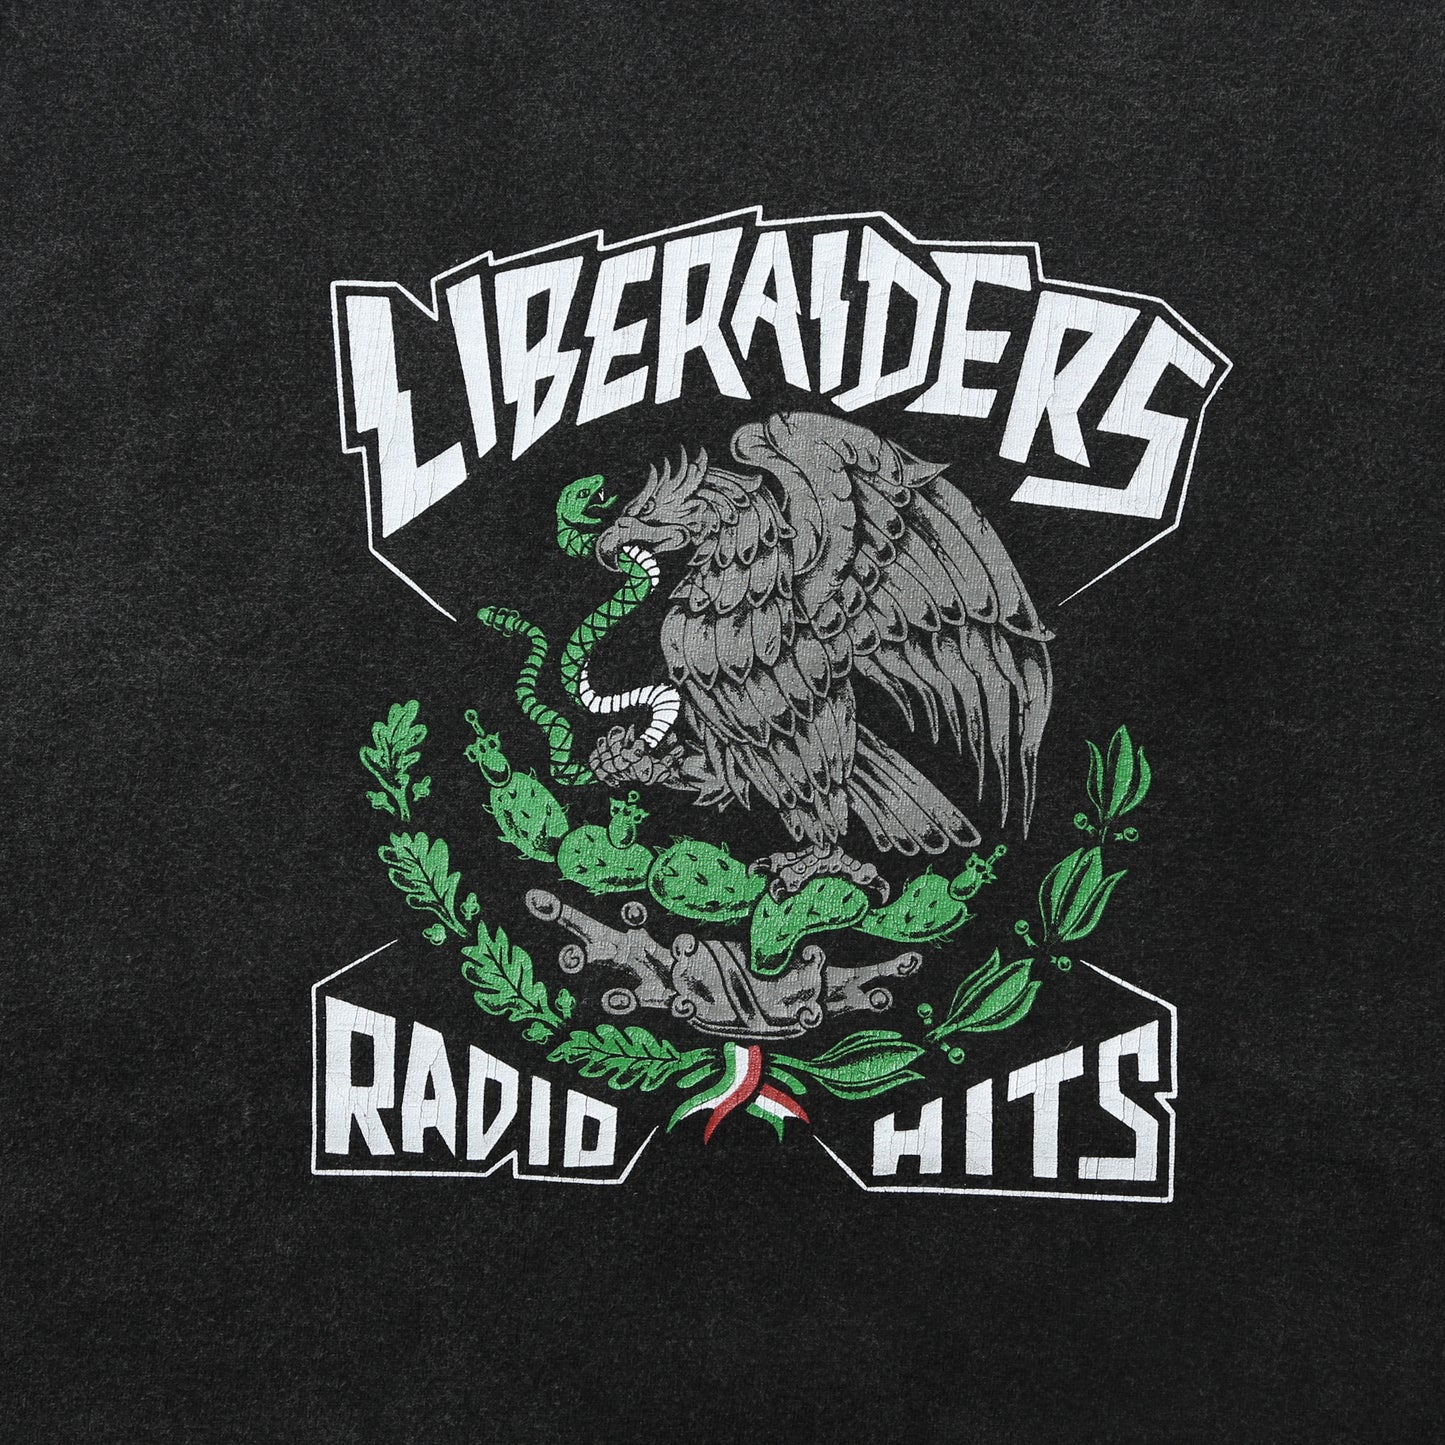 Liberaiders 23 / RADIO HITS LOGO TEE 75606